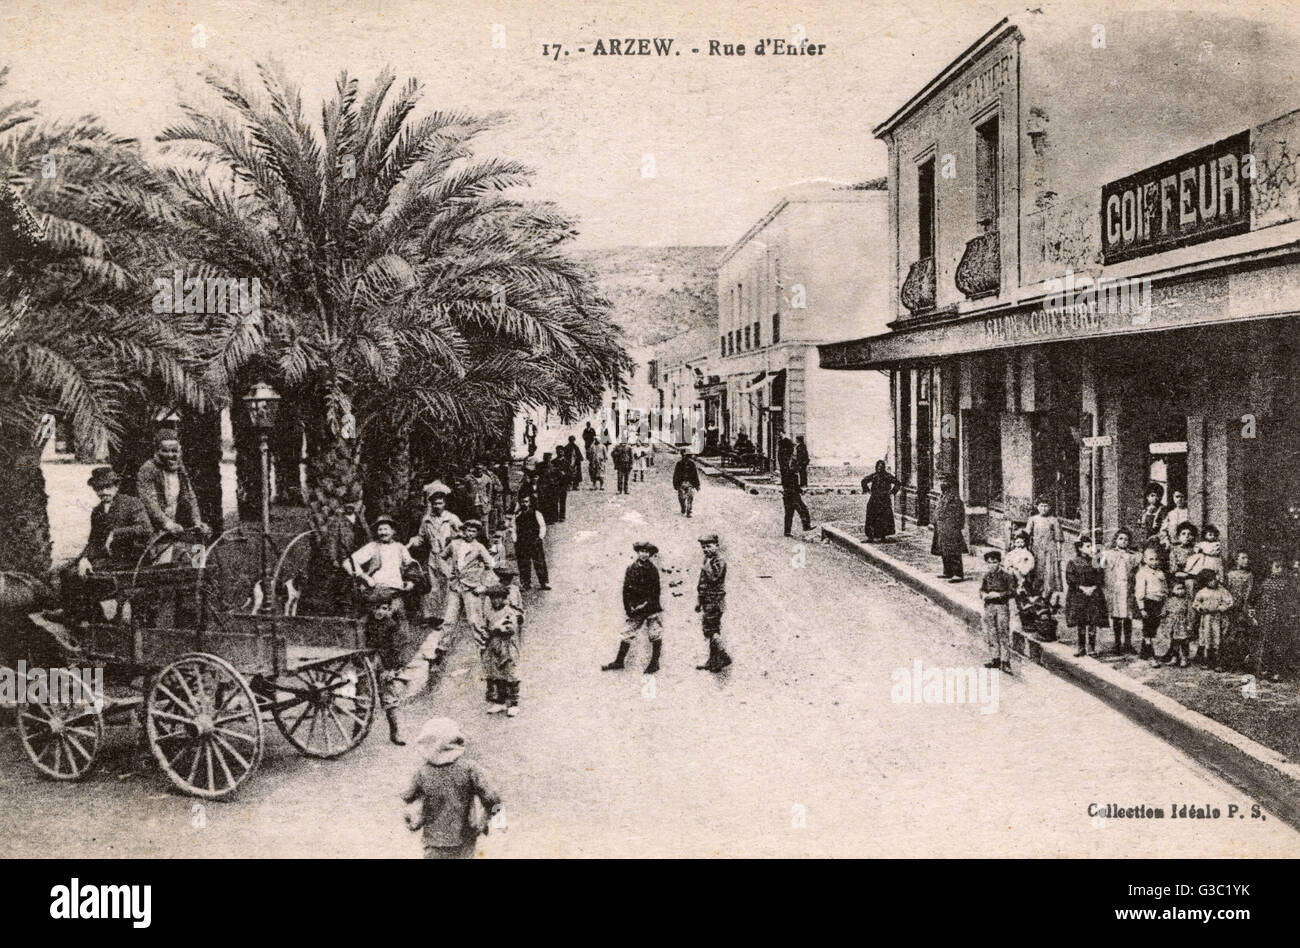 Algeria - Arzew - Rue d'Enfer Foto Stock